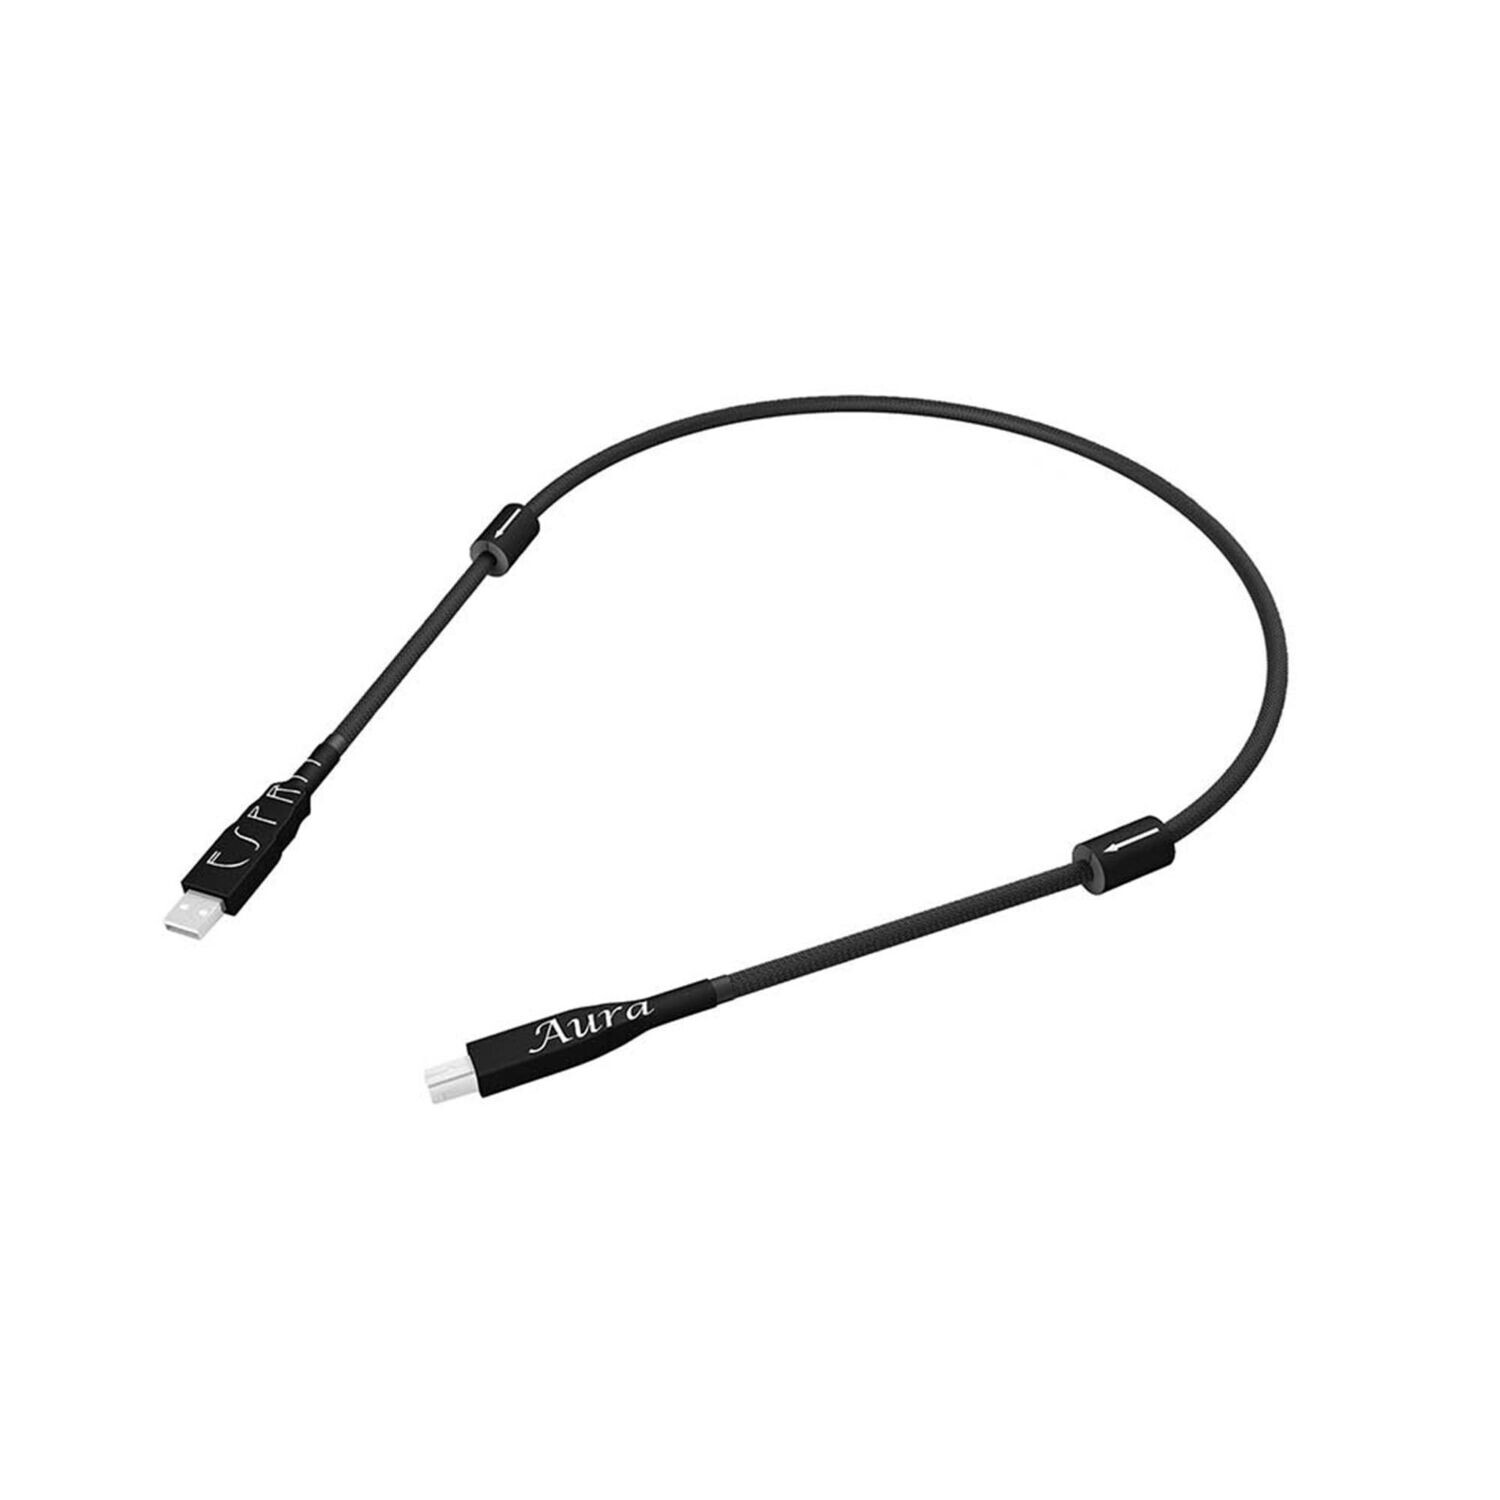 ESPRIT Aura Digital USB Cable, length: 1,0m